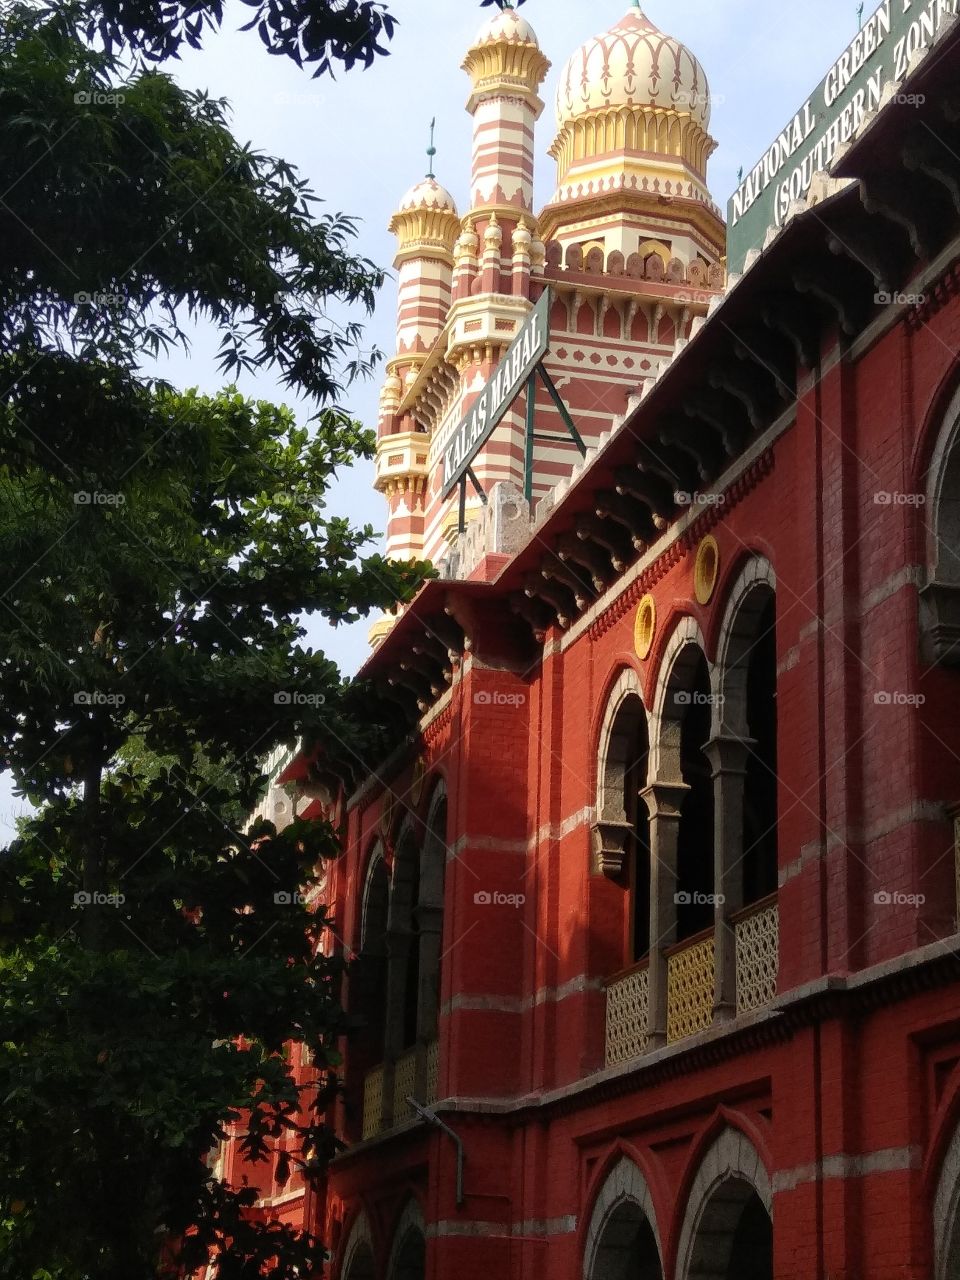 "The Heritage frame" featuring Chepauk palace, Chennai, India